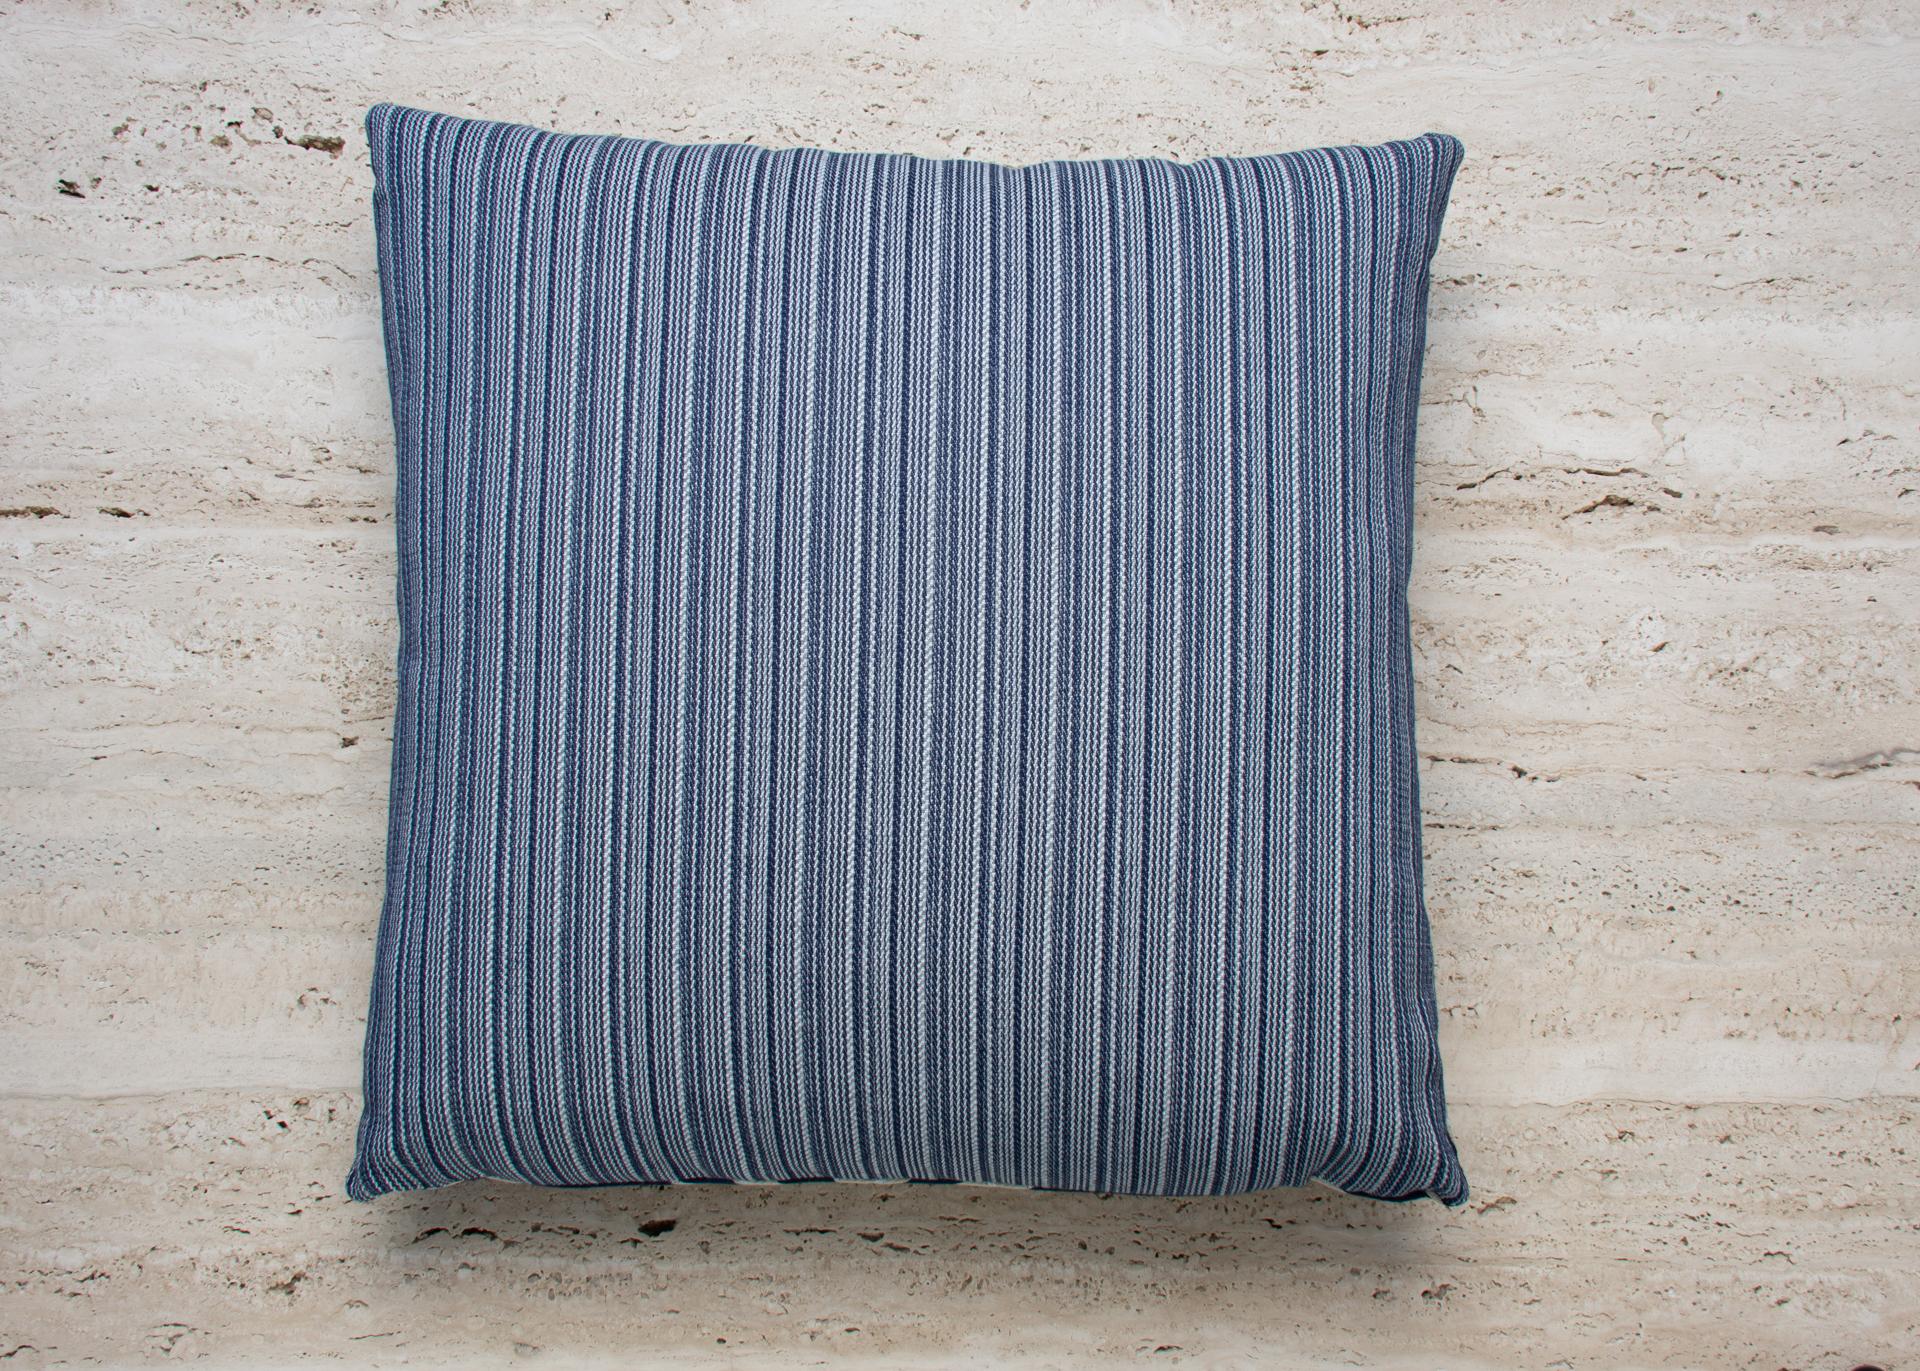 hermes blue pillow